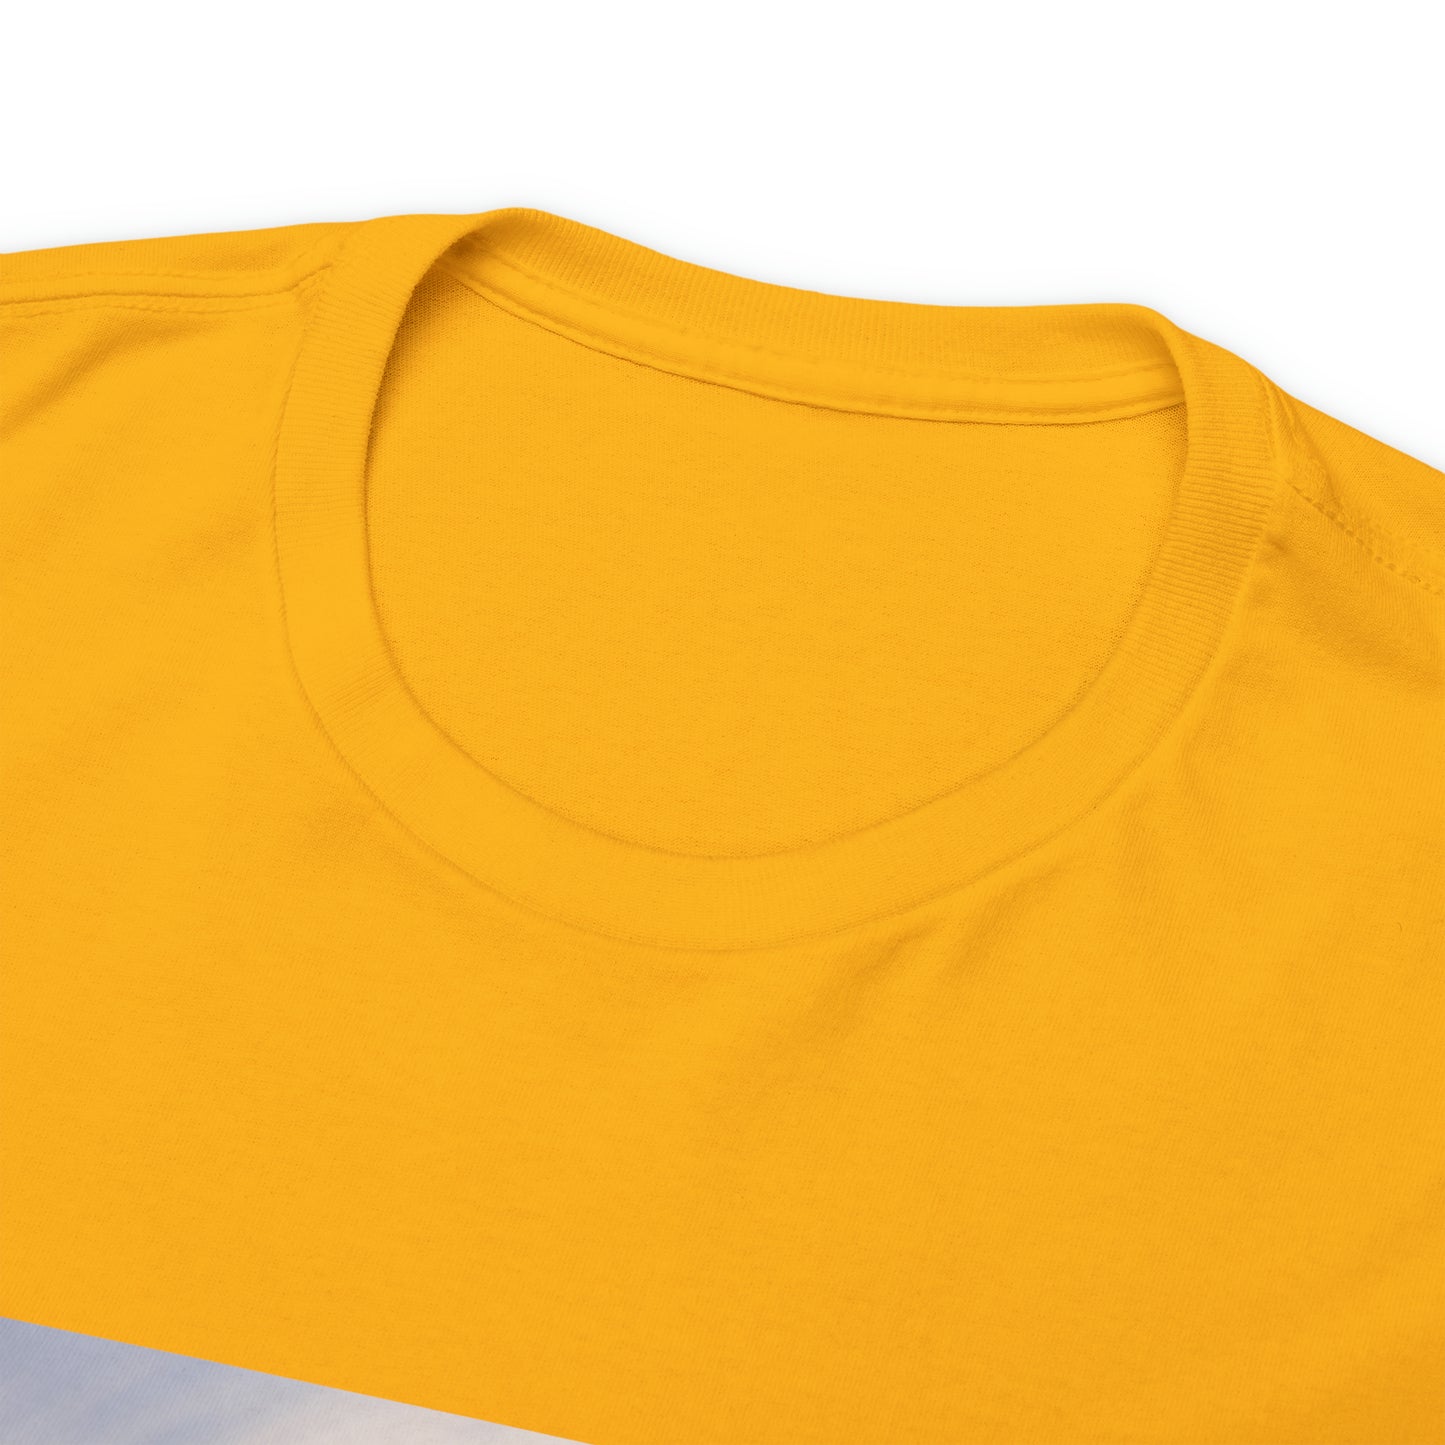 Steve Irwin 2 - light shirts